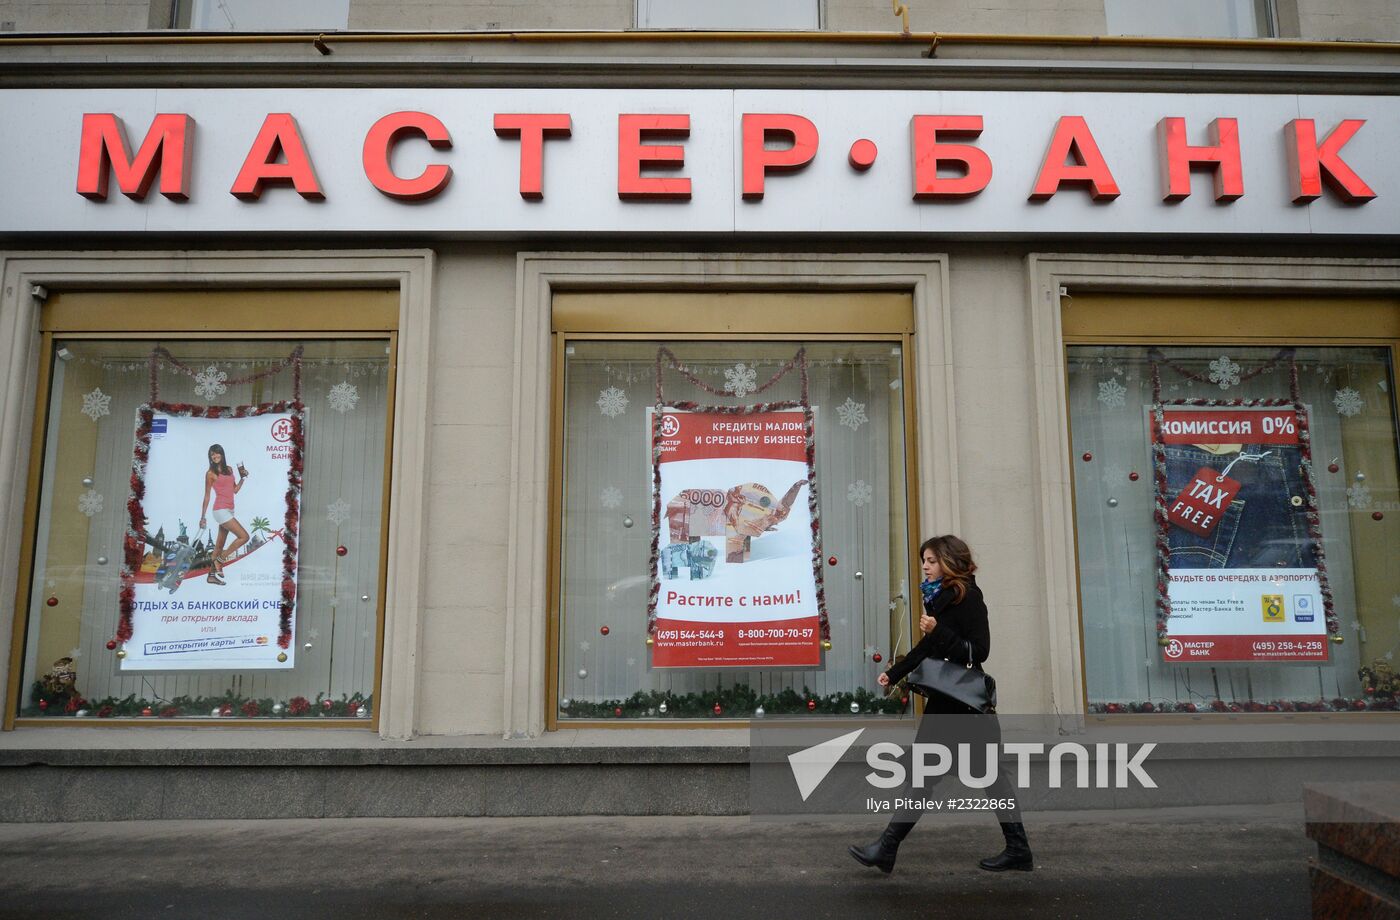 Russian Central Bank terminates Master Bank's license